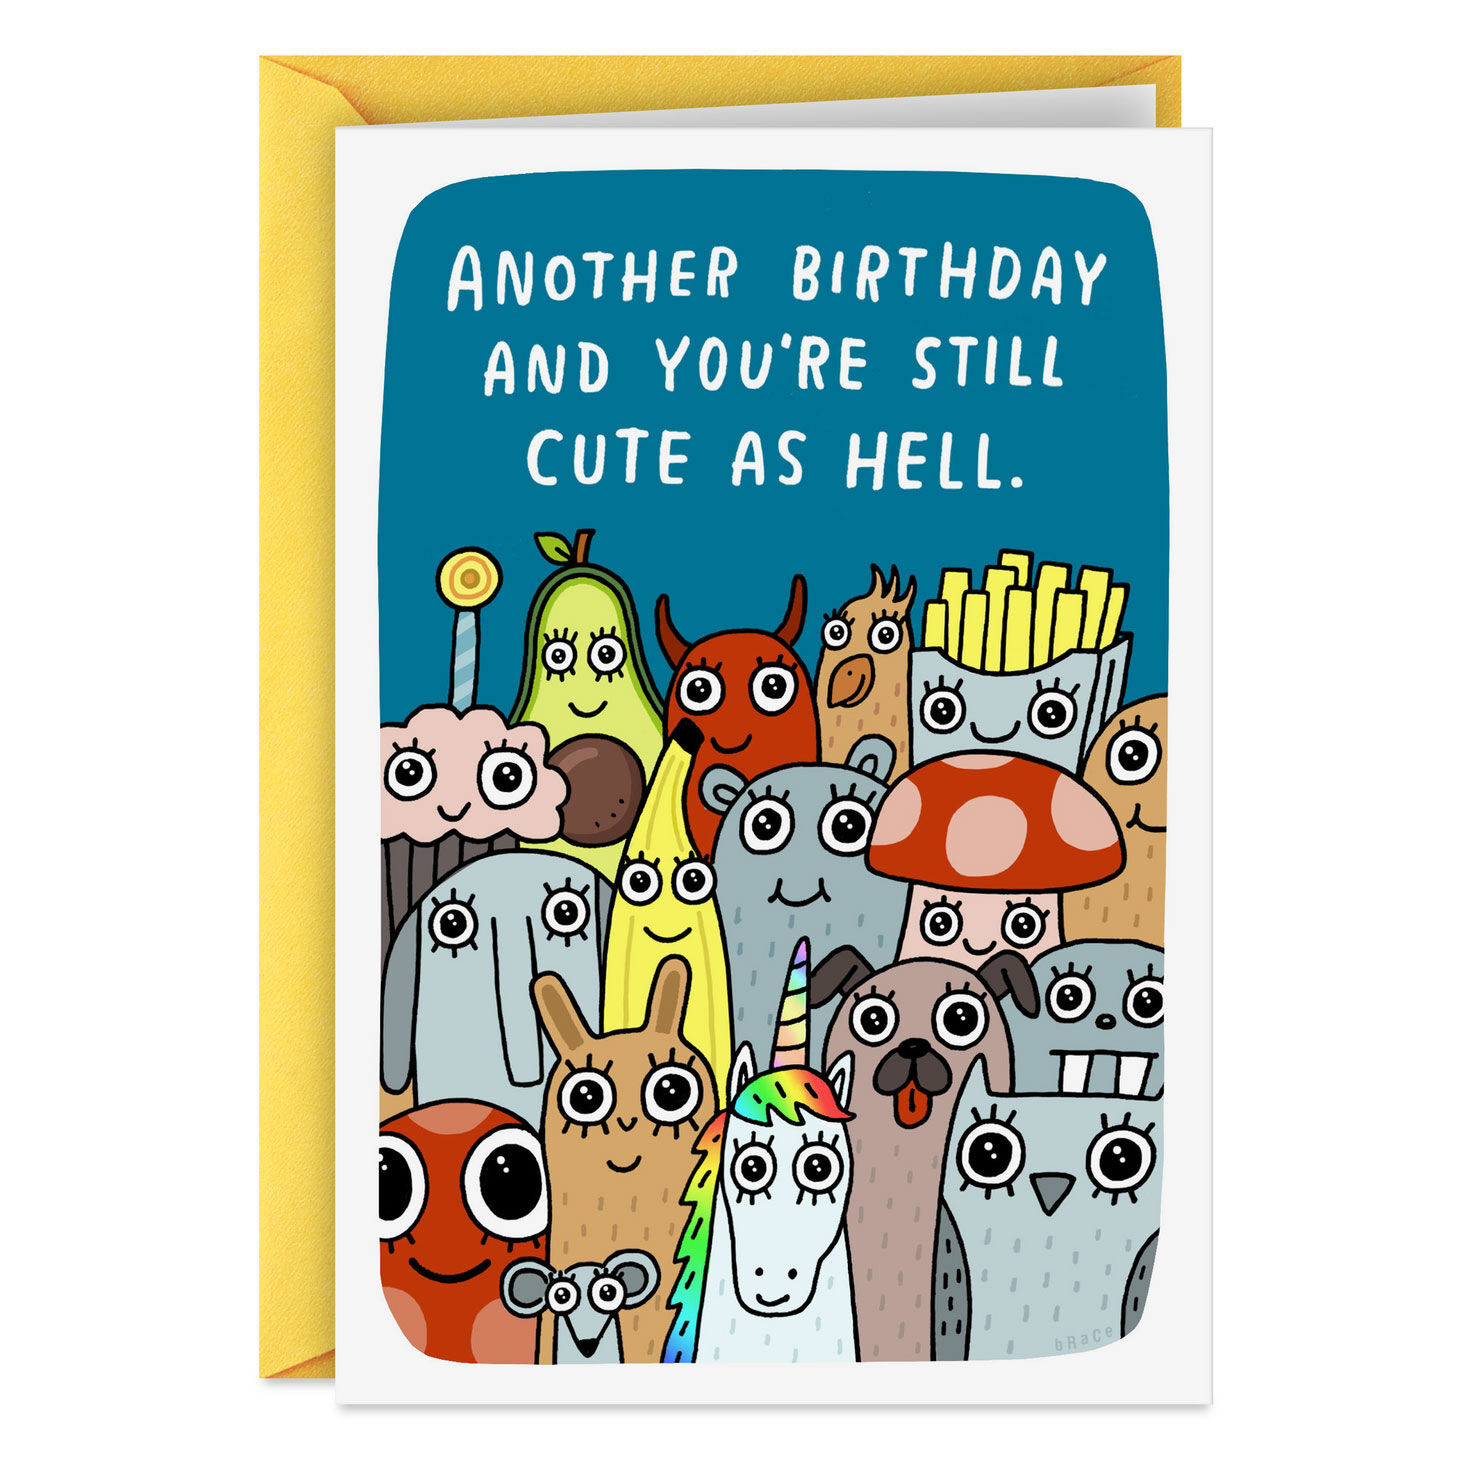 Still Cute as Hell Funny Birthday Card for only USD 3.99 | Hallmark